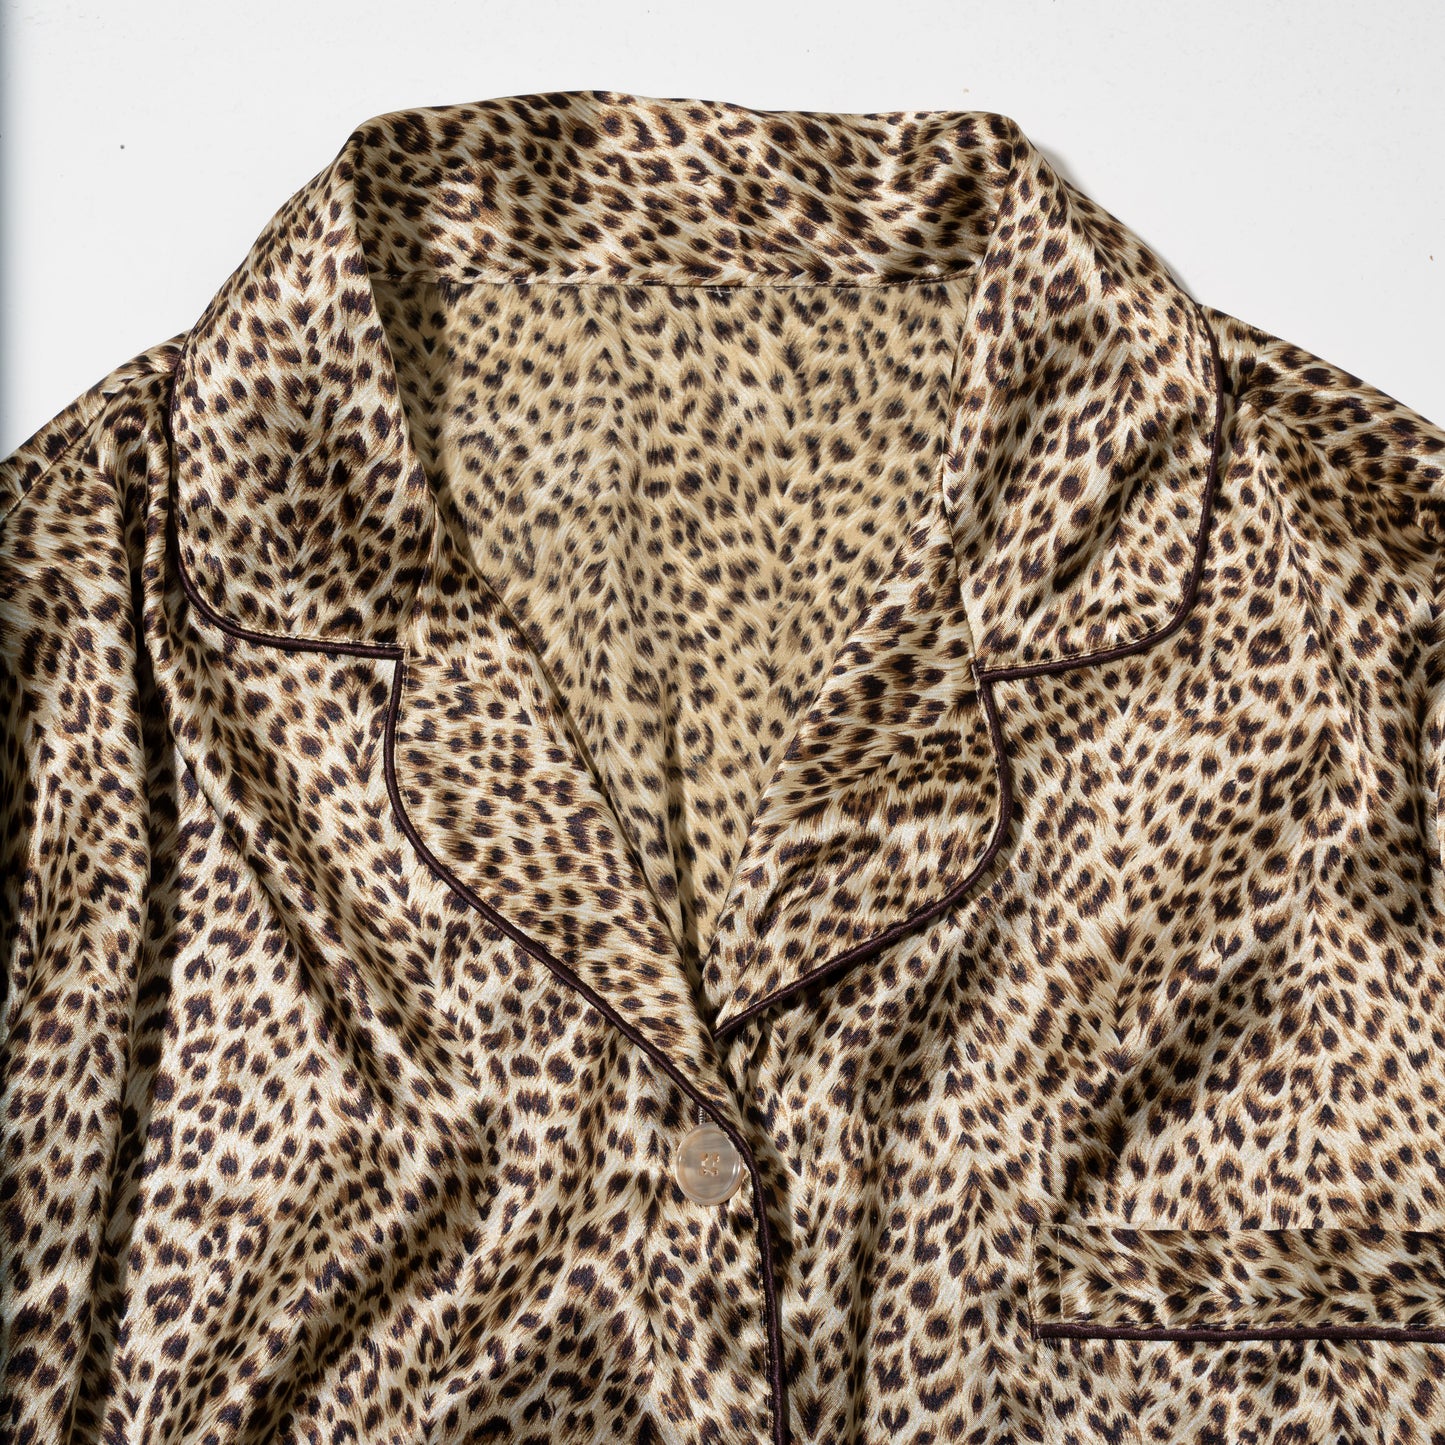 vintage leopard sleeper shirt